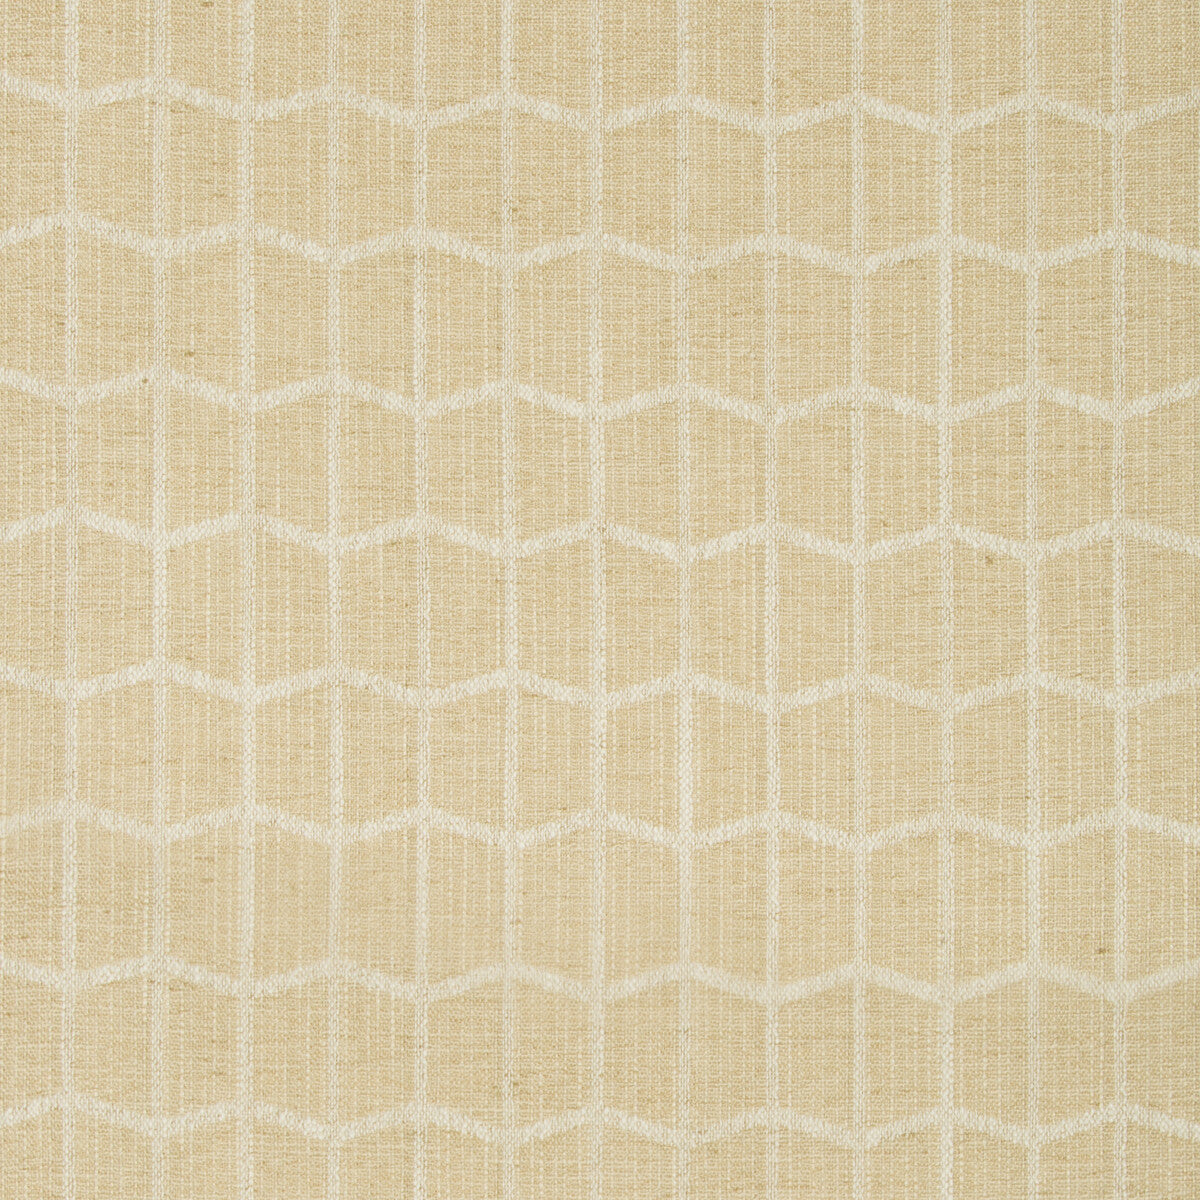 Kravet Smart fabric in 35332-16 color - pattern 35332.16.0 - by Kravet Smart in the Performance Kravetarmor collection